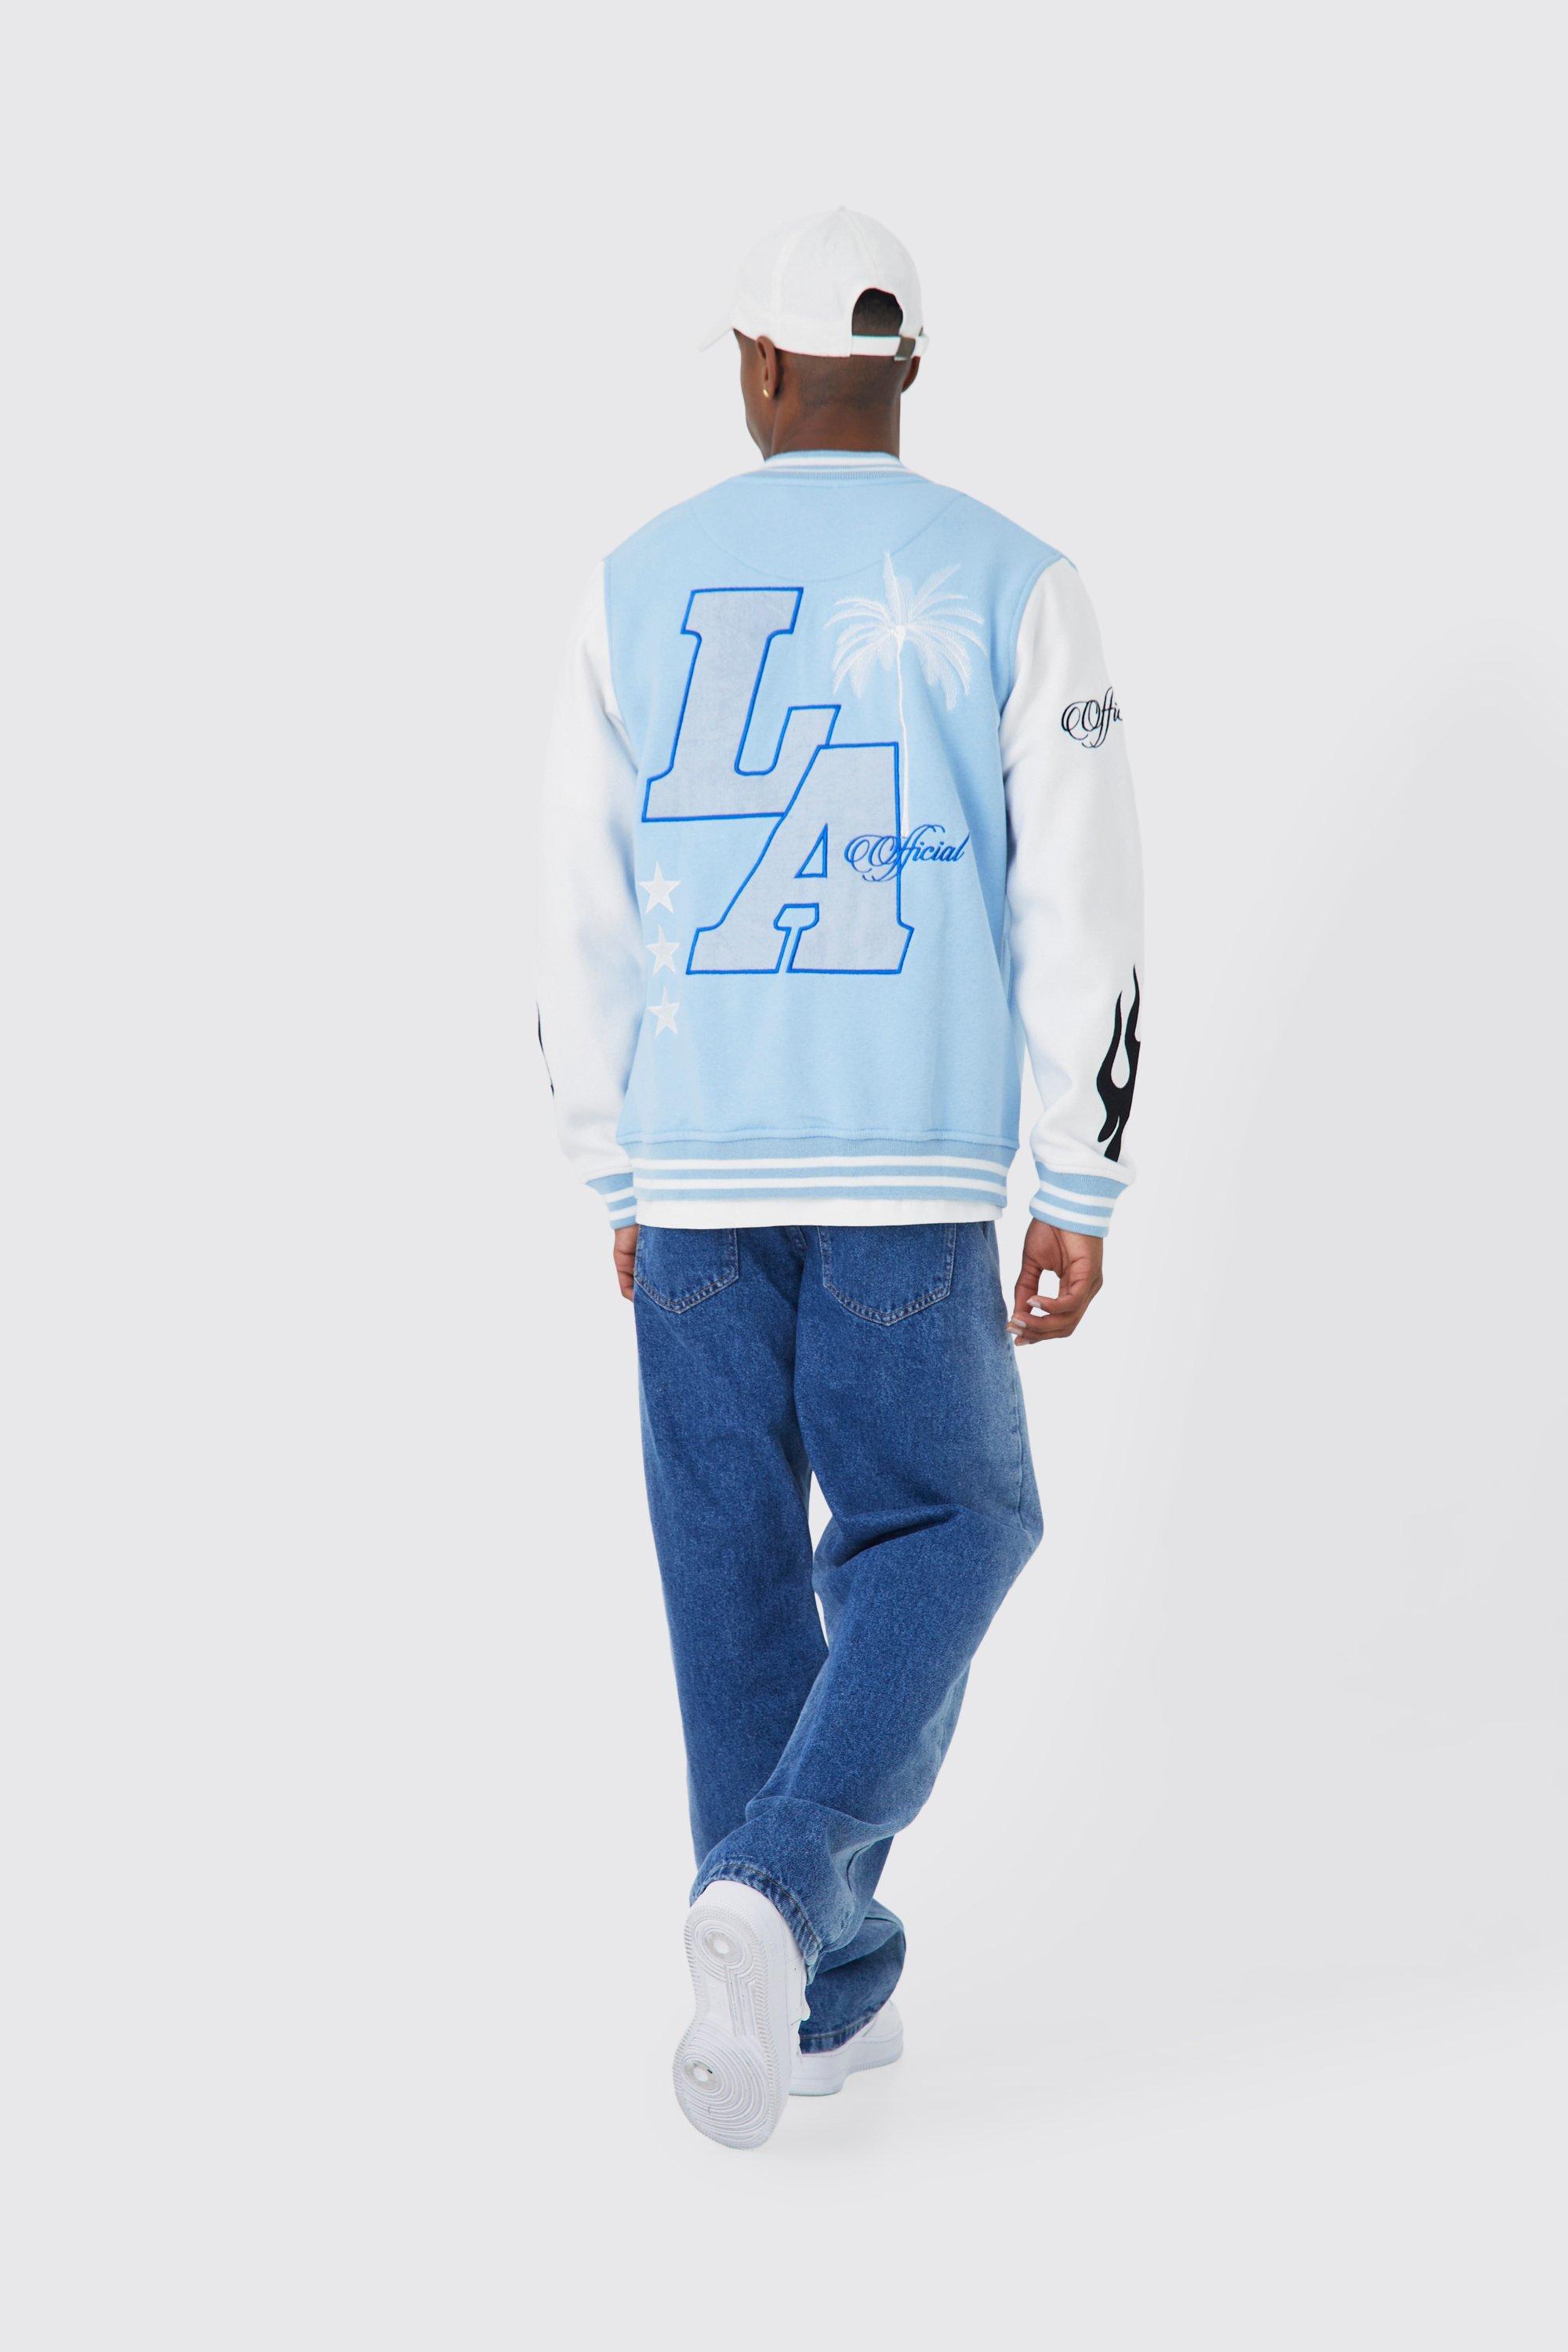 LA Sky Blue Letterman Jacket, Varsity Jackets, Unisex